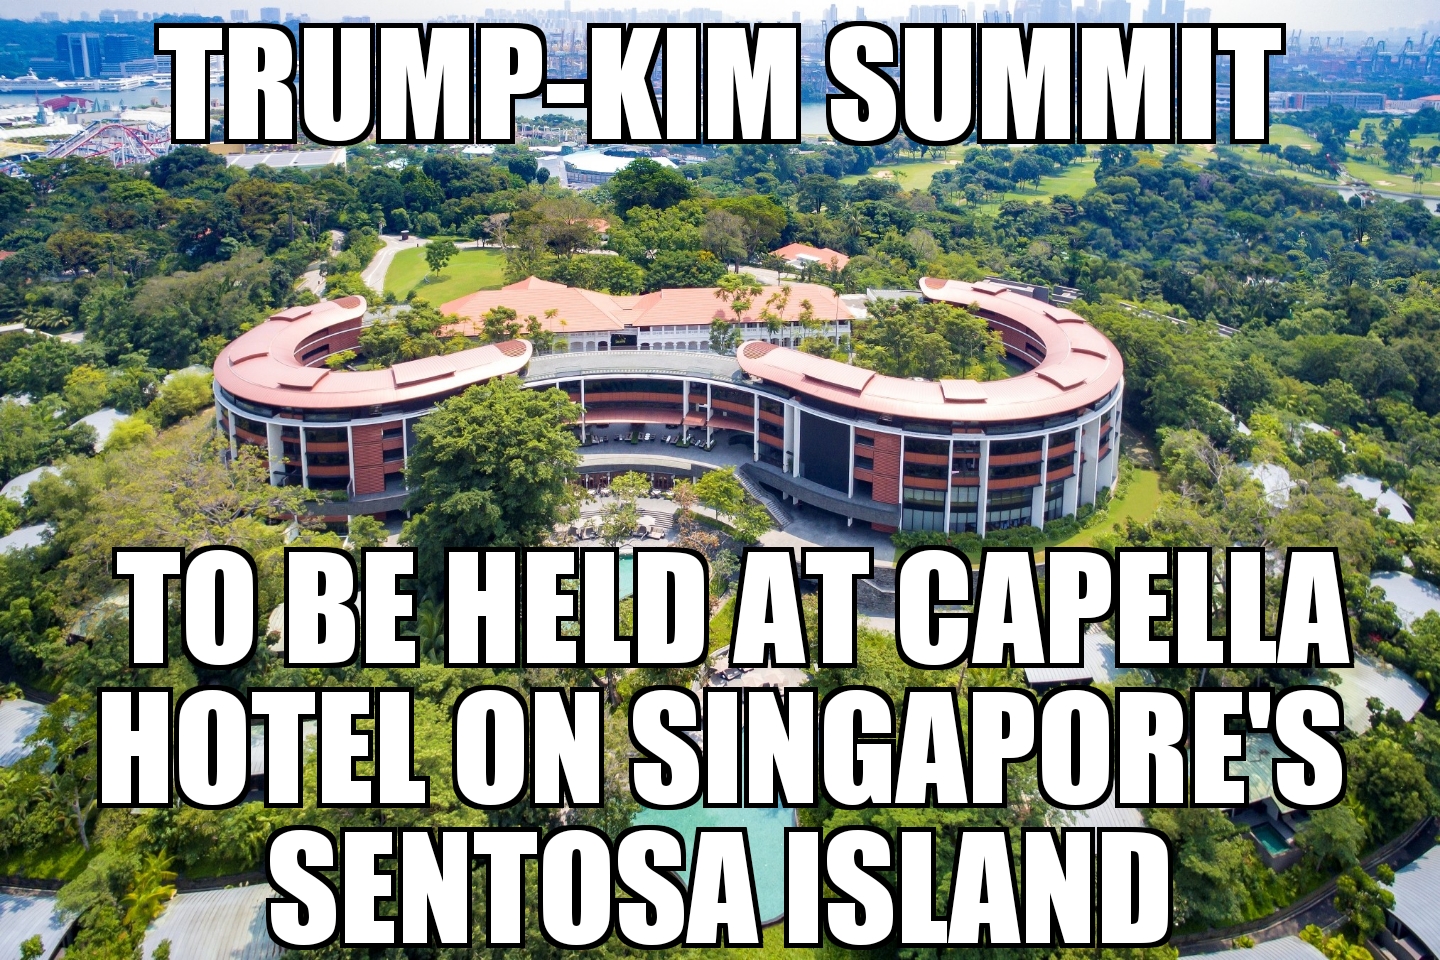 Trump-Kim summit to be on Sentosa Island